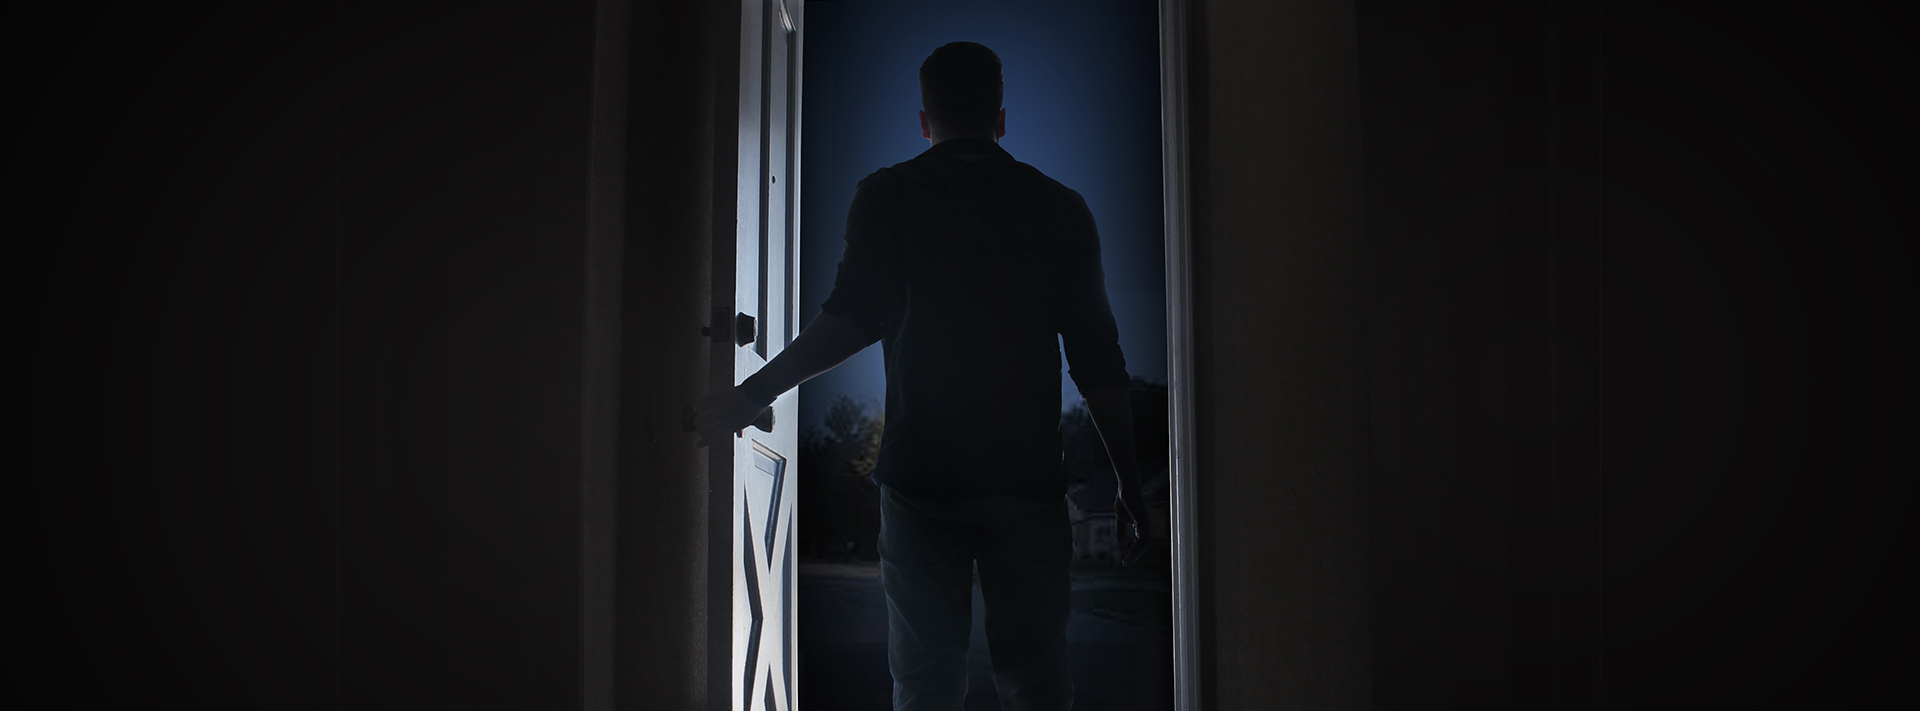 Horror Short: A Knock At The Door